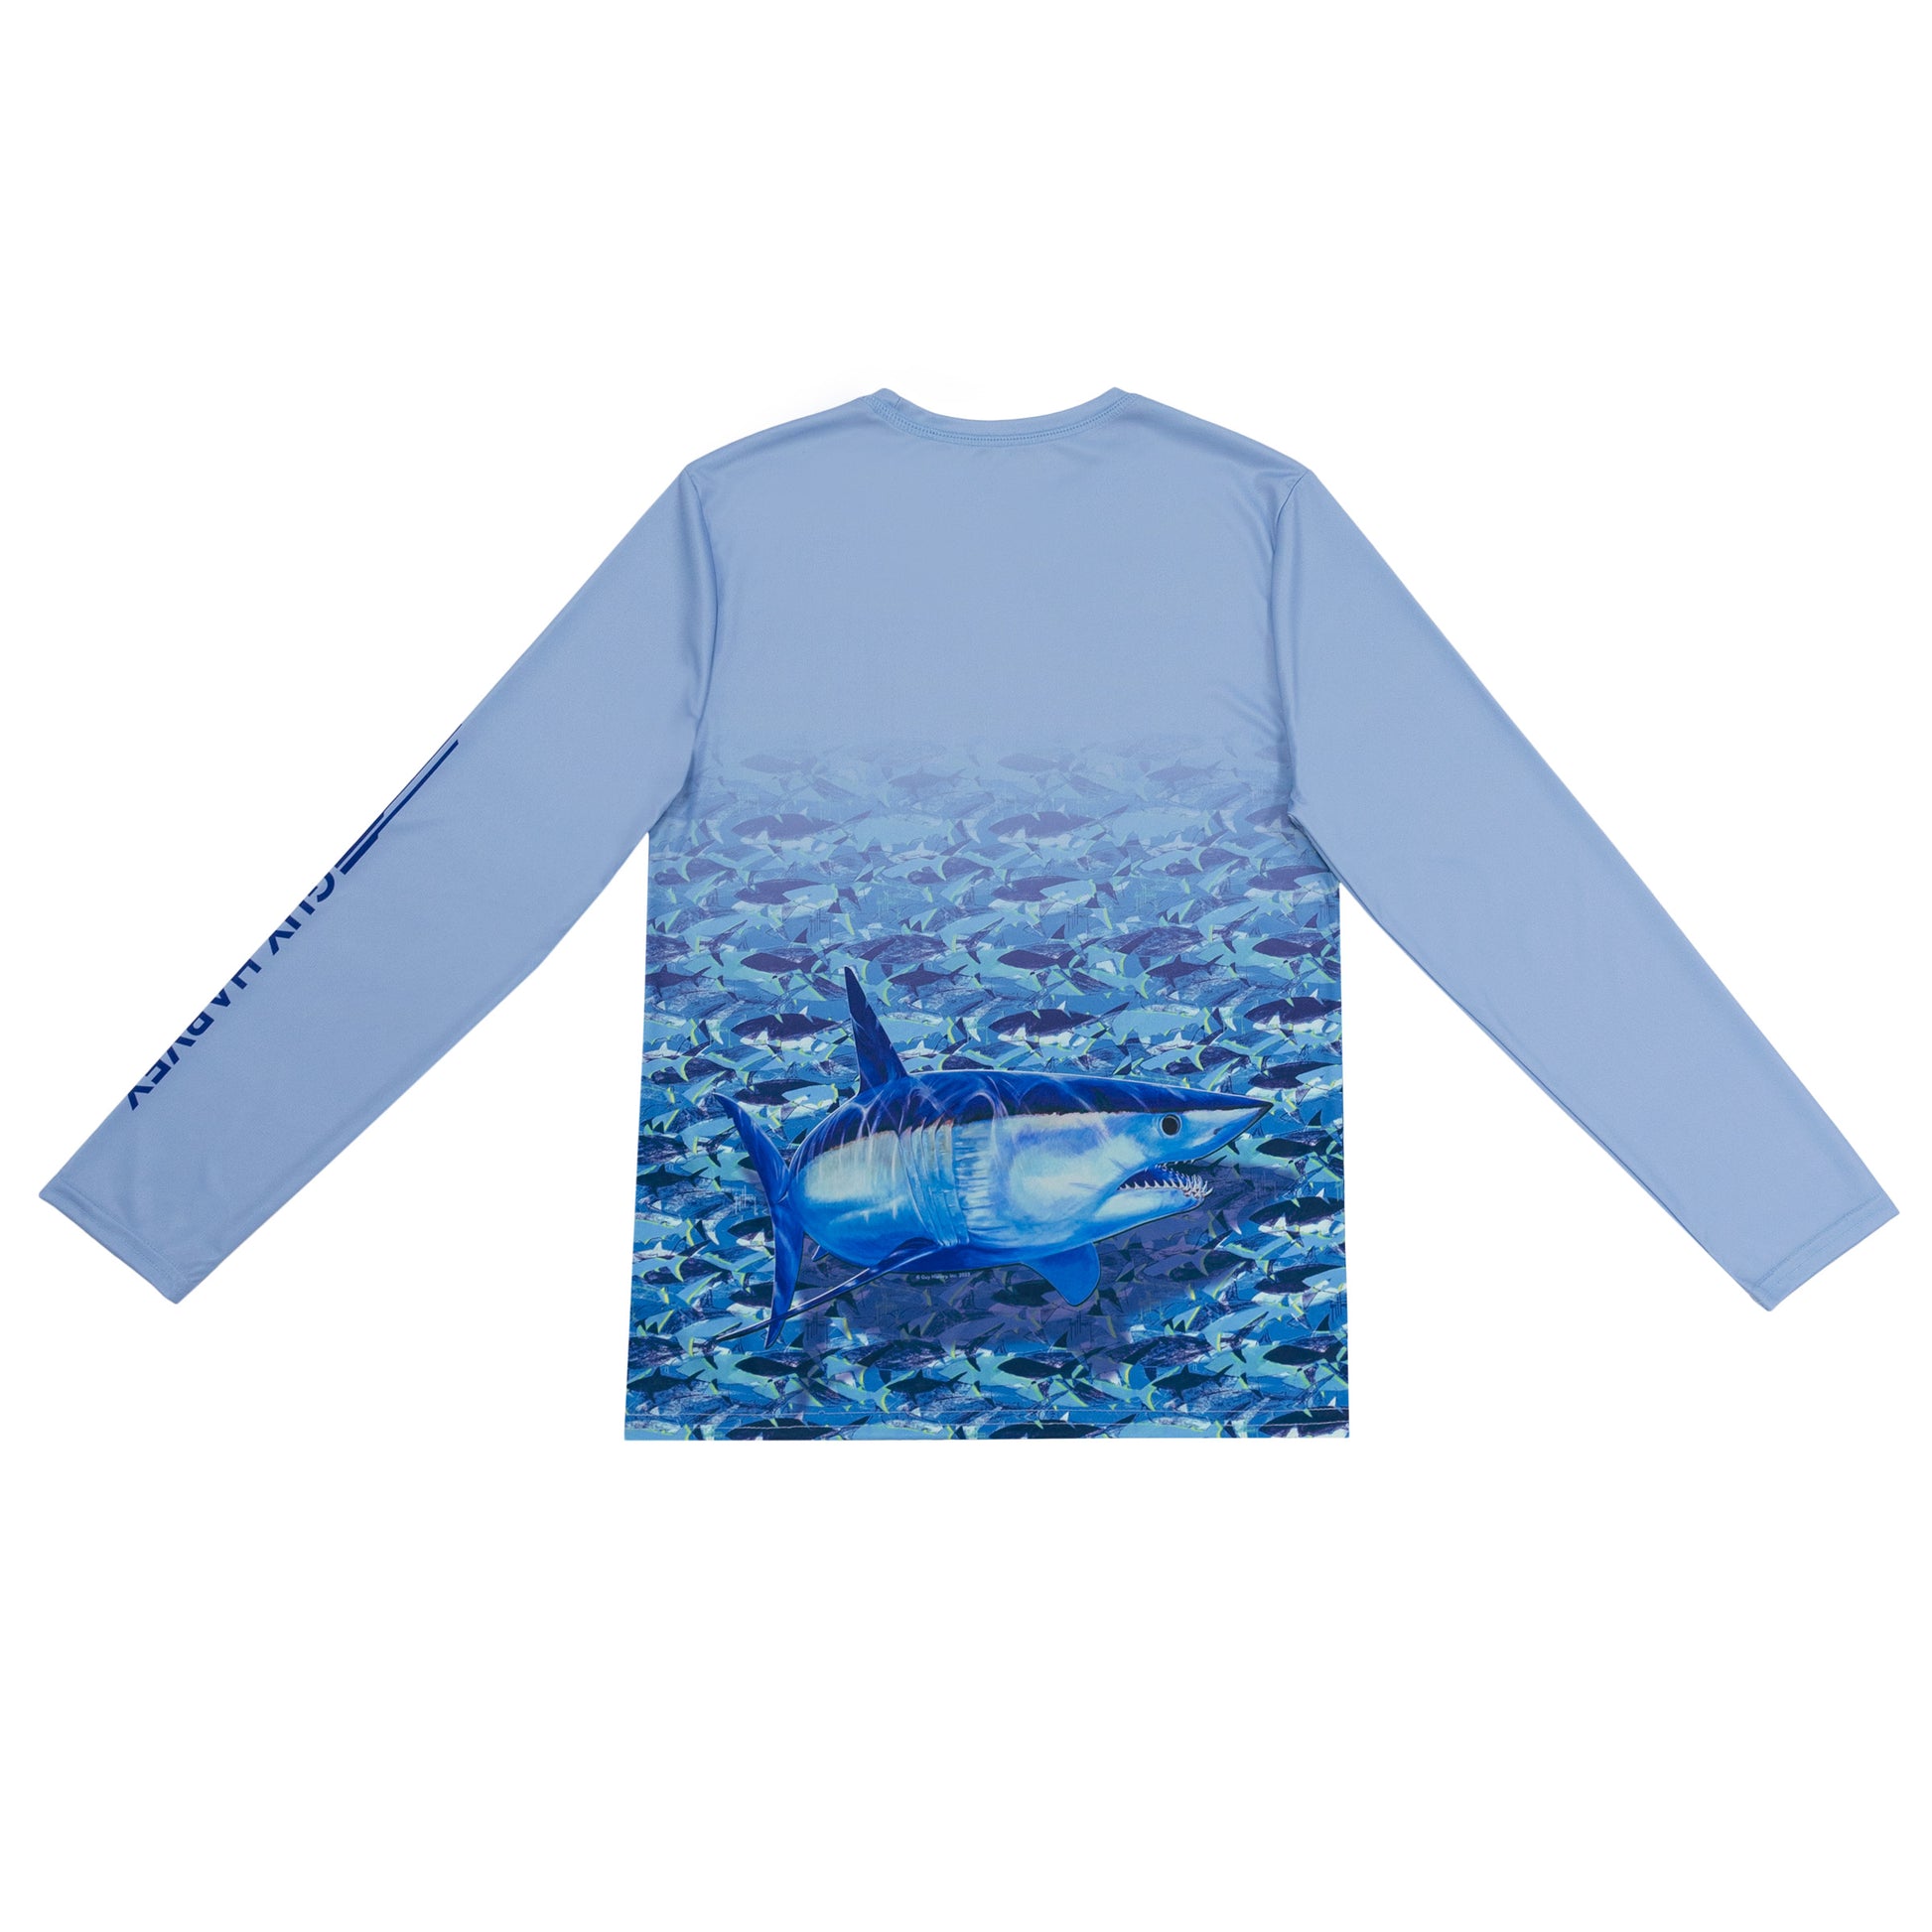 Toddler Whale Shark Performance Longsleeve Shirt